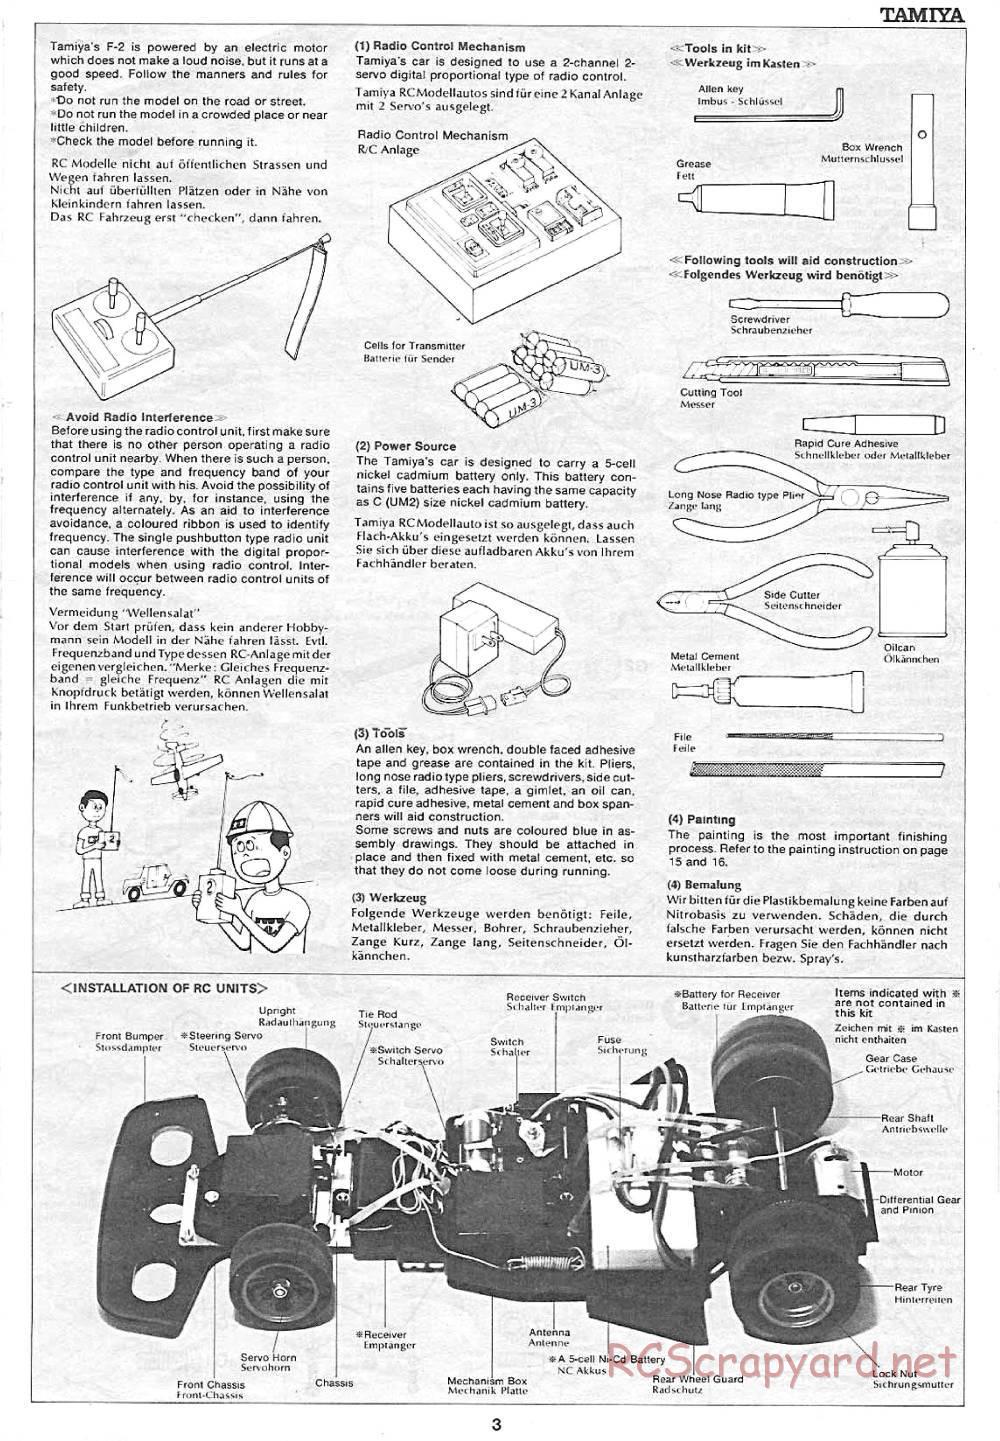 Tamiya - Ralt RT2 Hart 420R (F2) - 58018 - Manual - Page 3